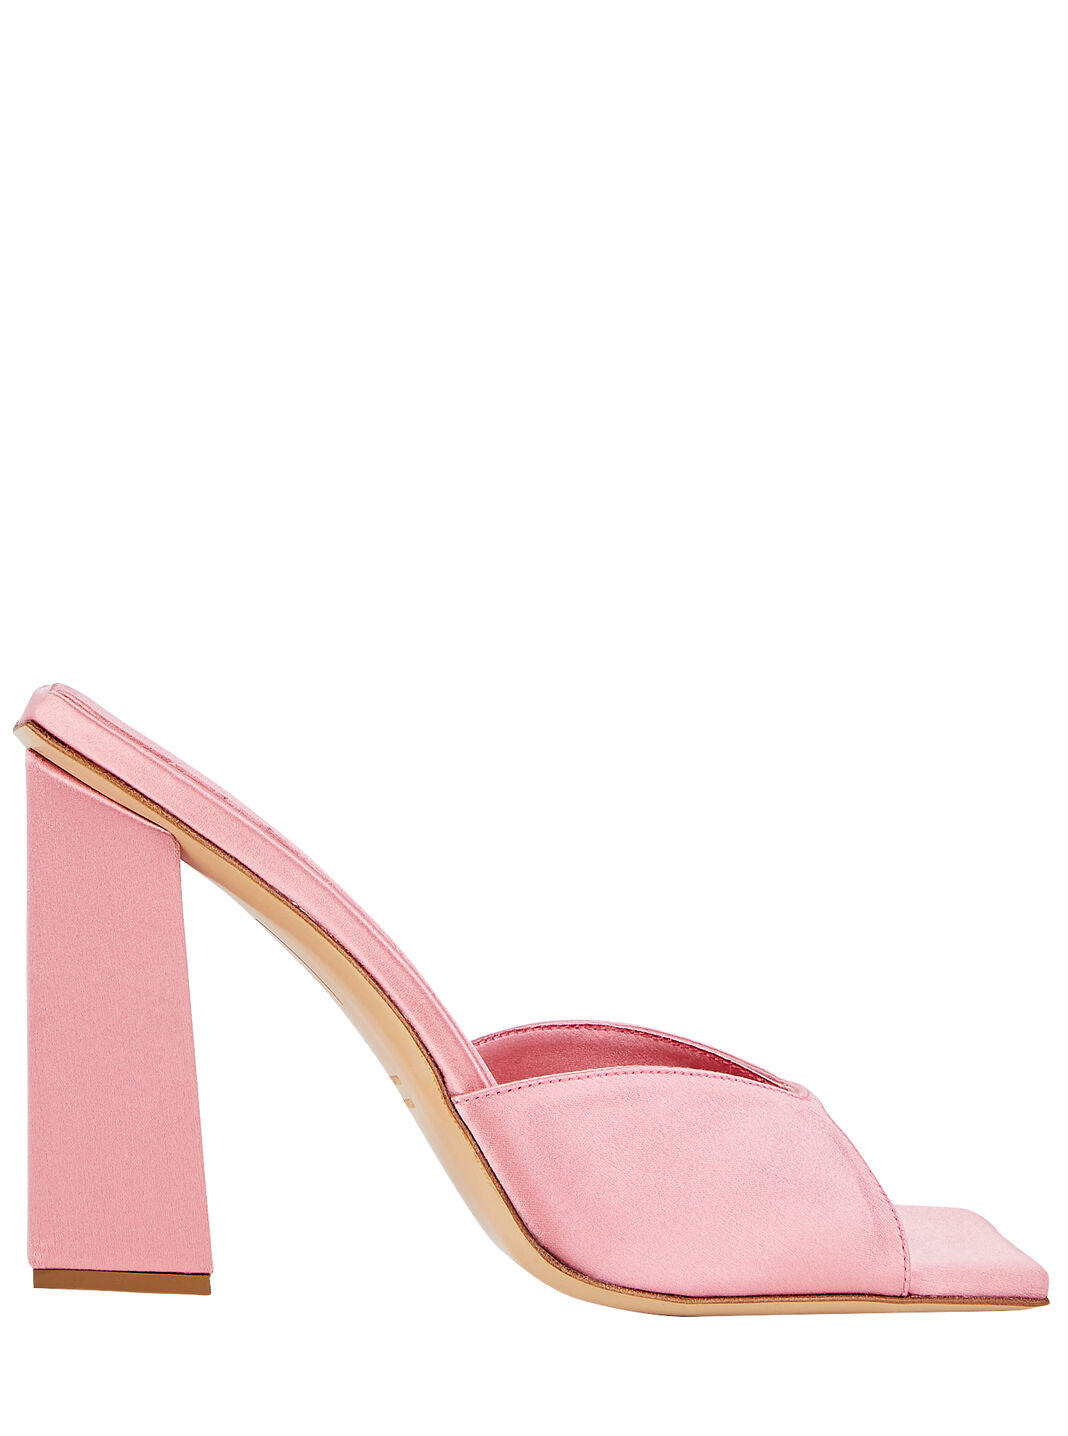 Gia Borghini X RHW Rosie Satin Sandals In Pink | INTERMIX®